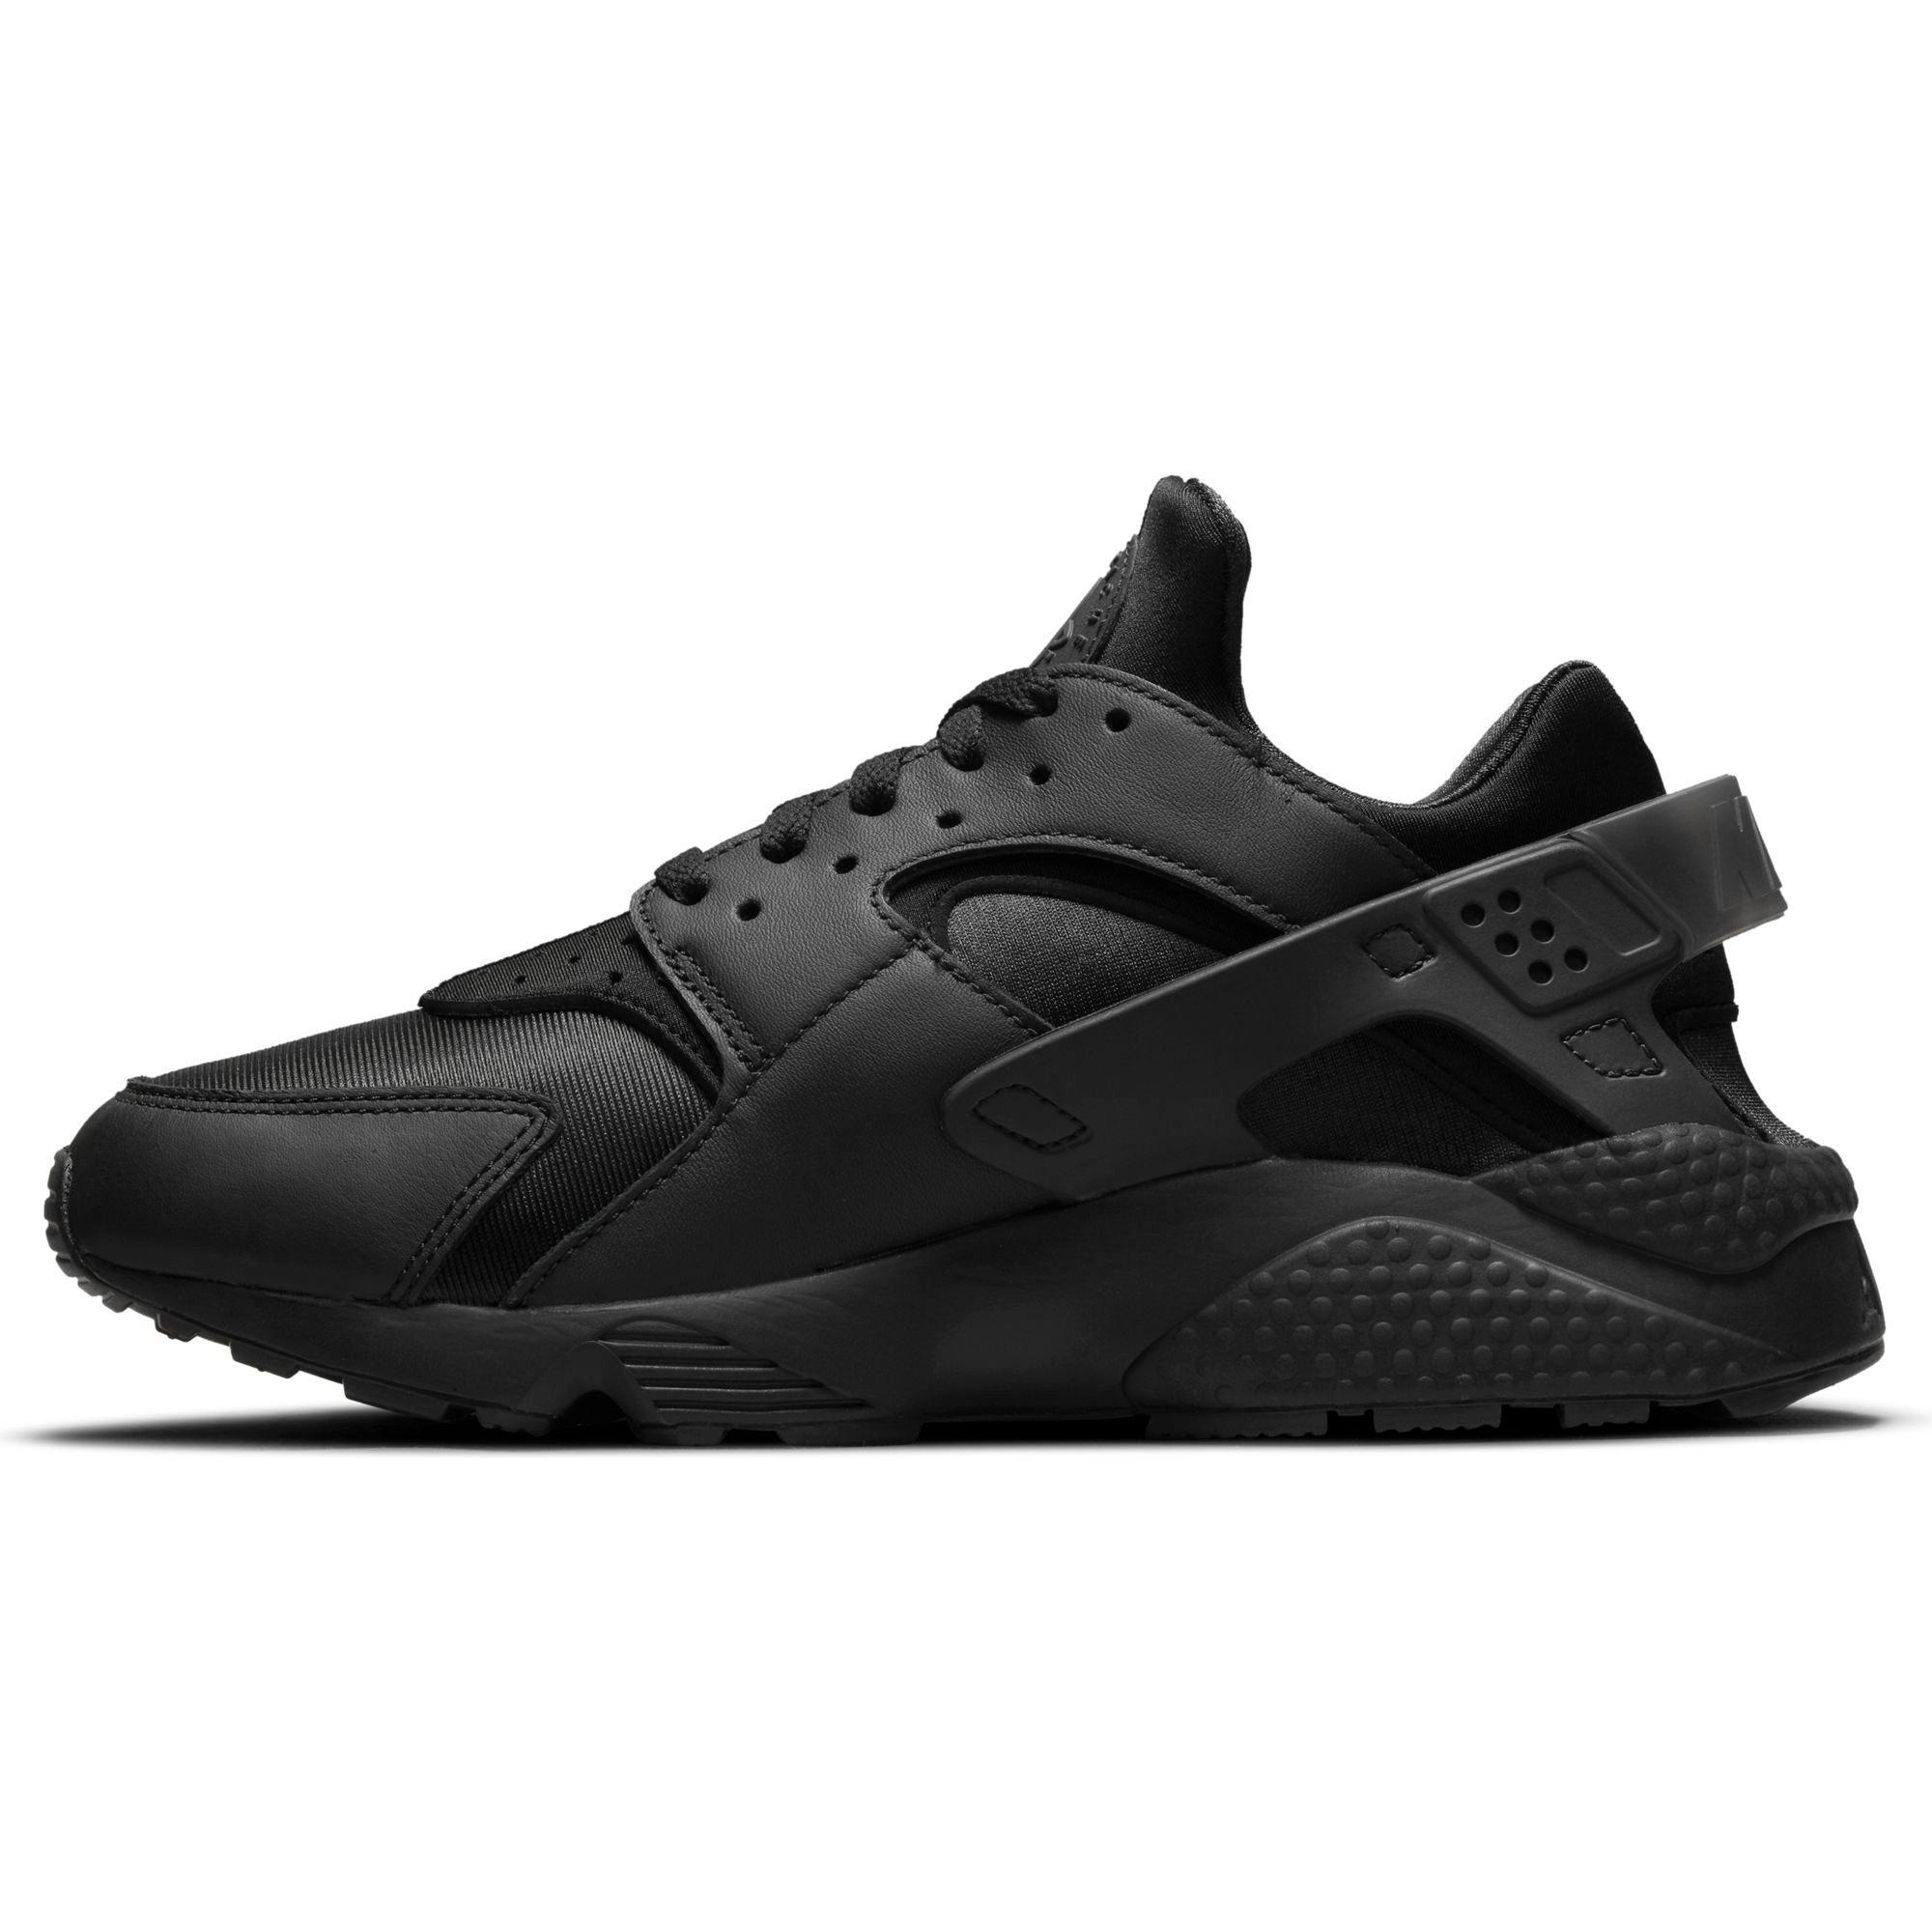 Strikt Kruipen Leia Nike Air Huarache "Black/Anthracite" Men's Shoe